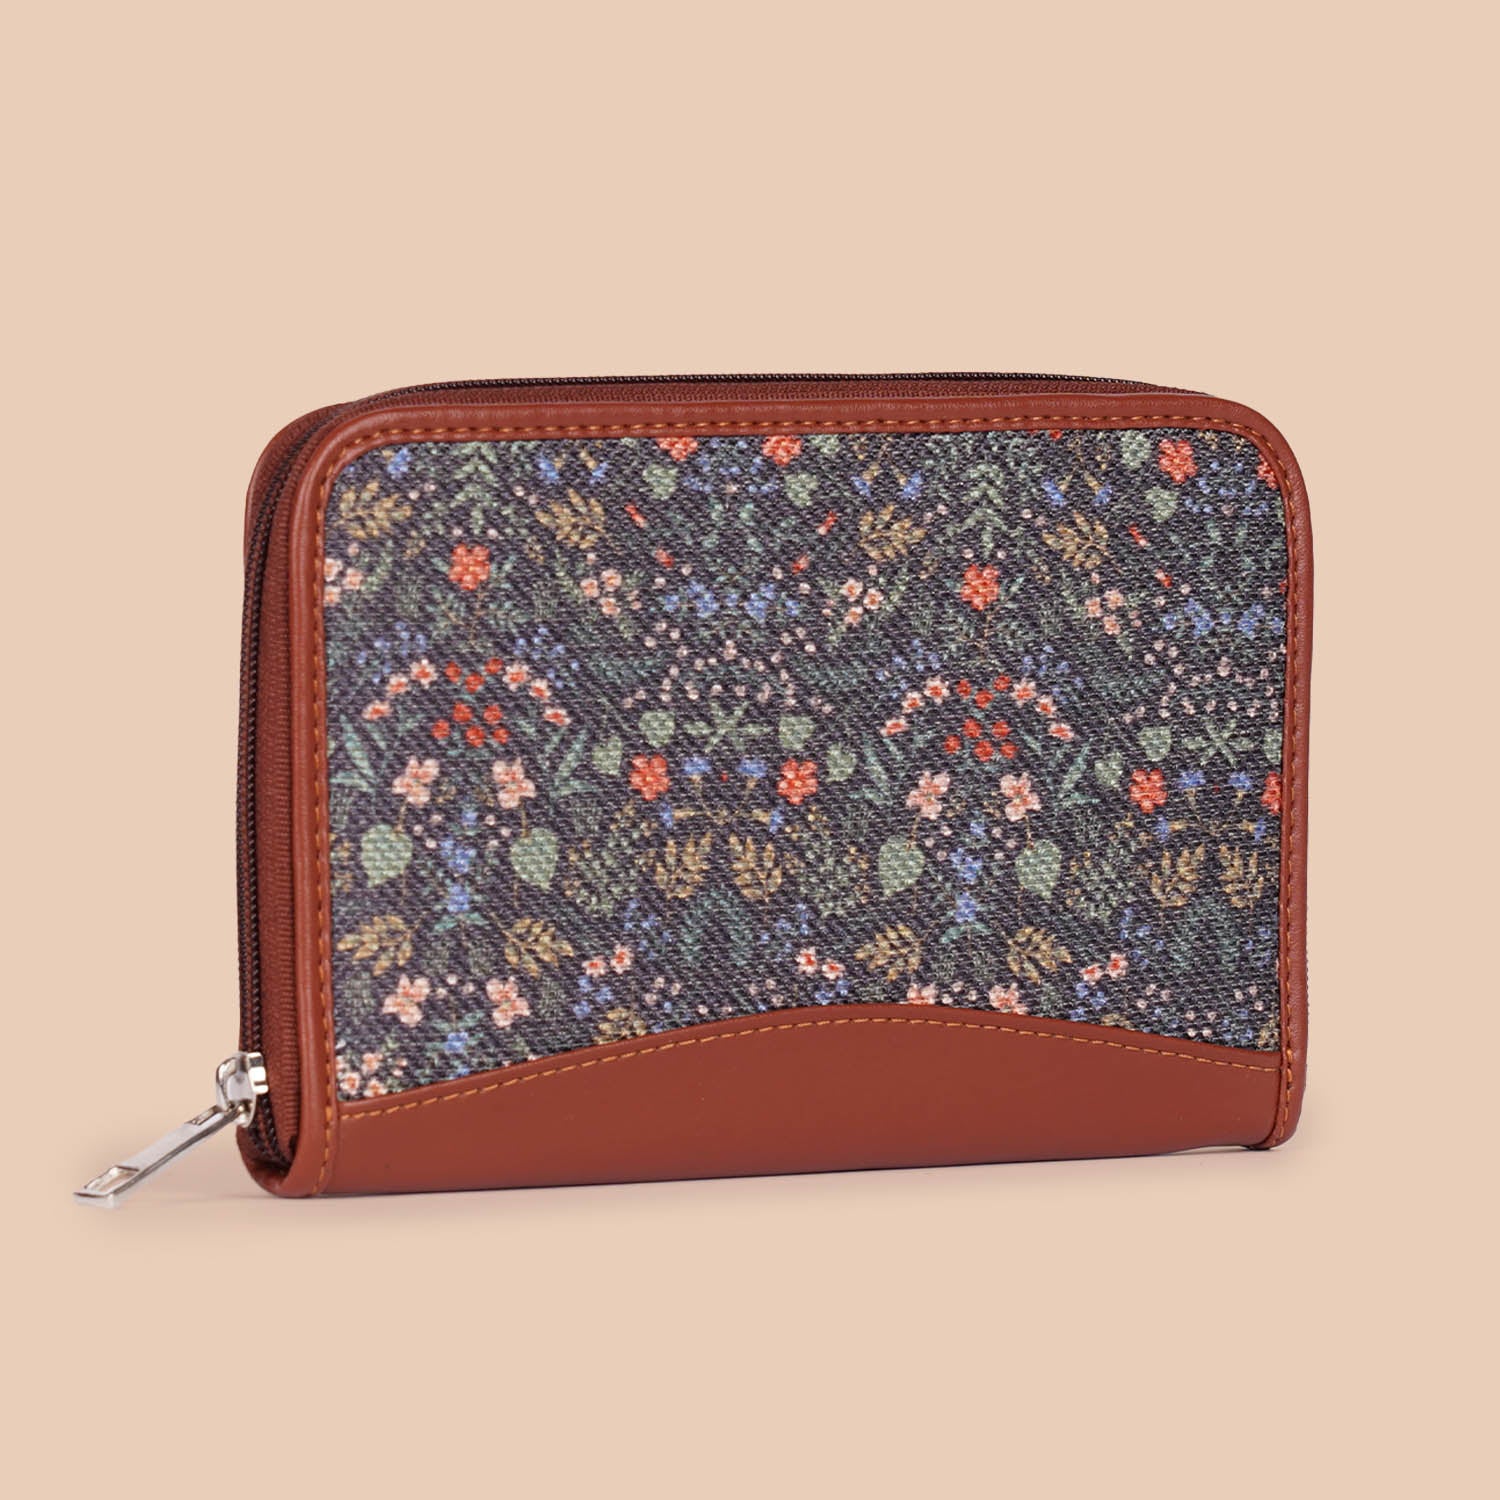 Buy SHRIDA Jewellery Designer Ladies Chain Wallet Bag for Women  (Blue/Brown) at Amazon.in